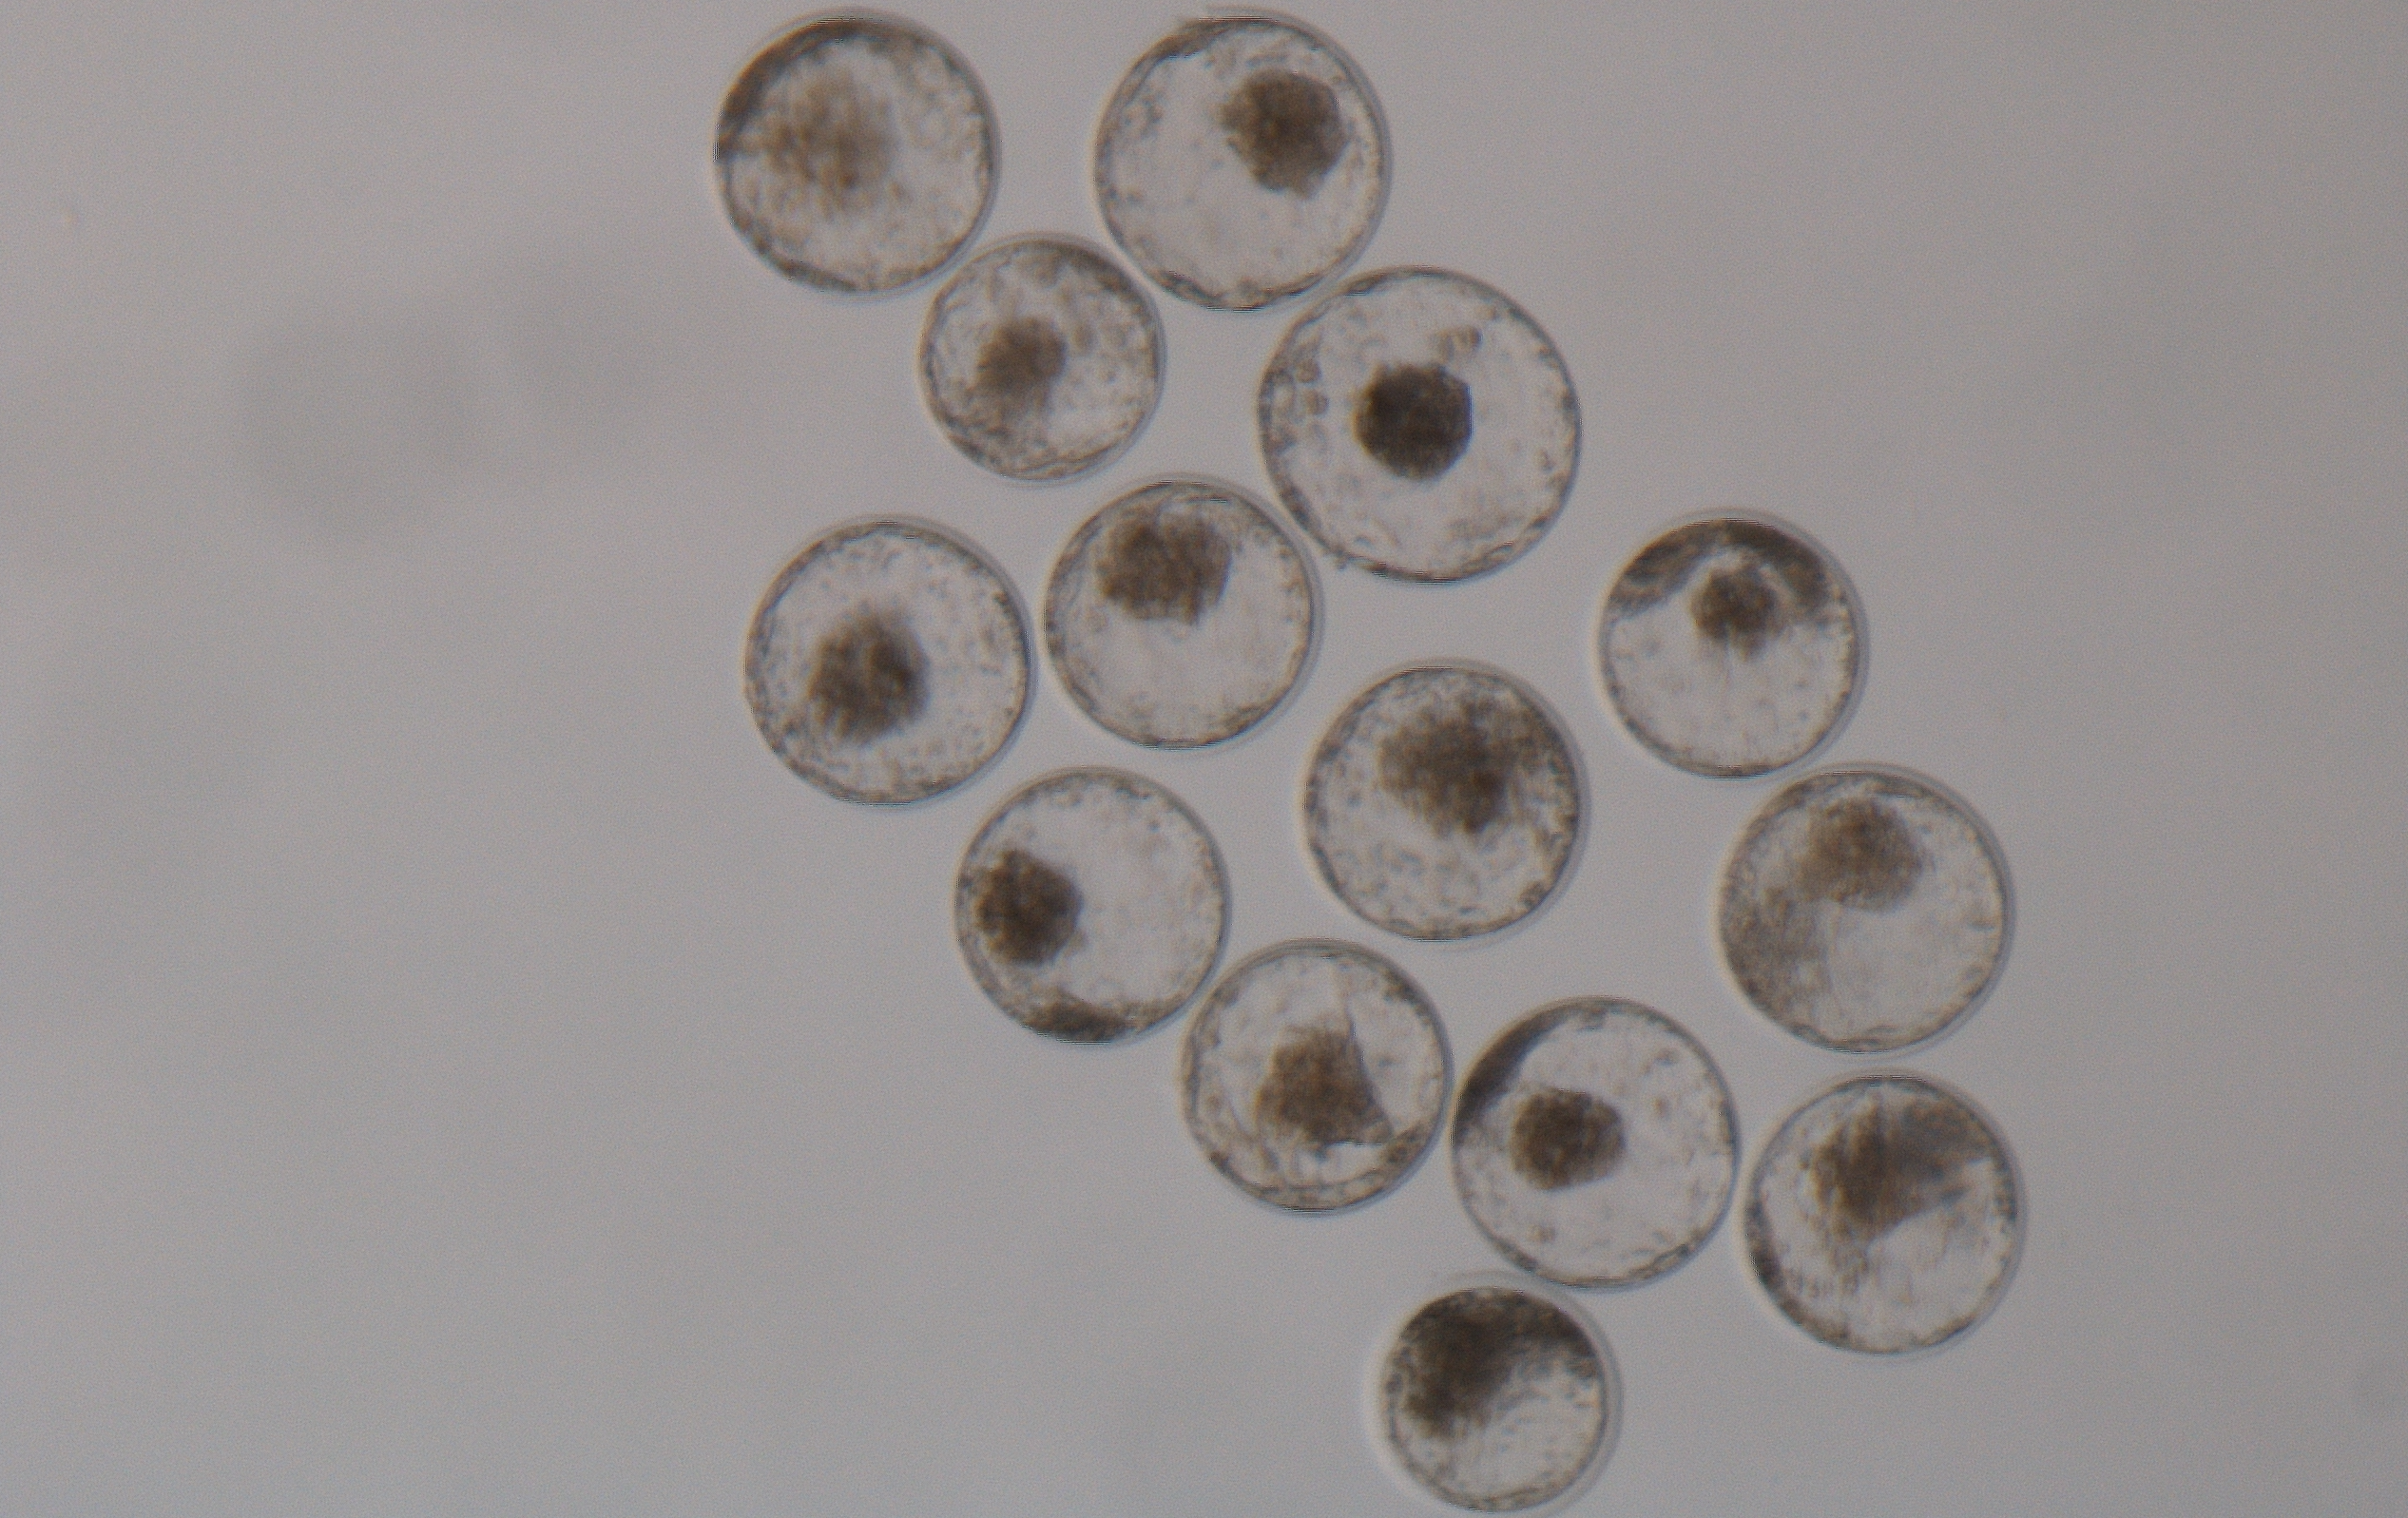 biase lab blastocysts